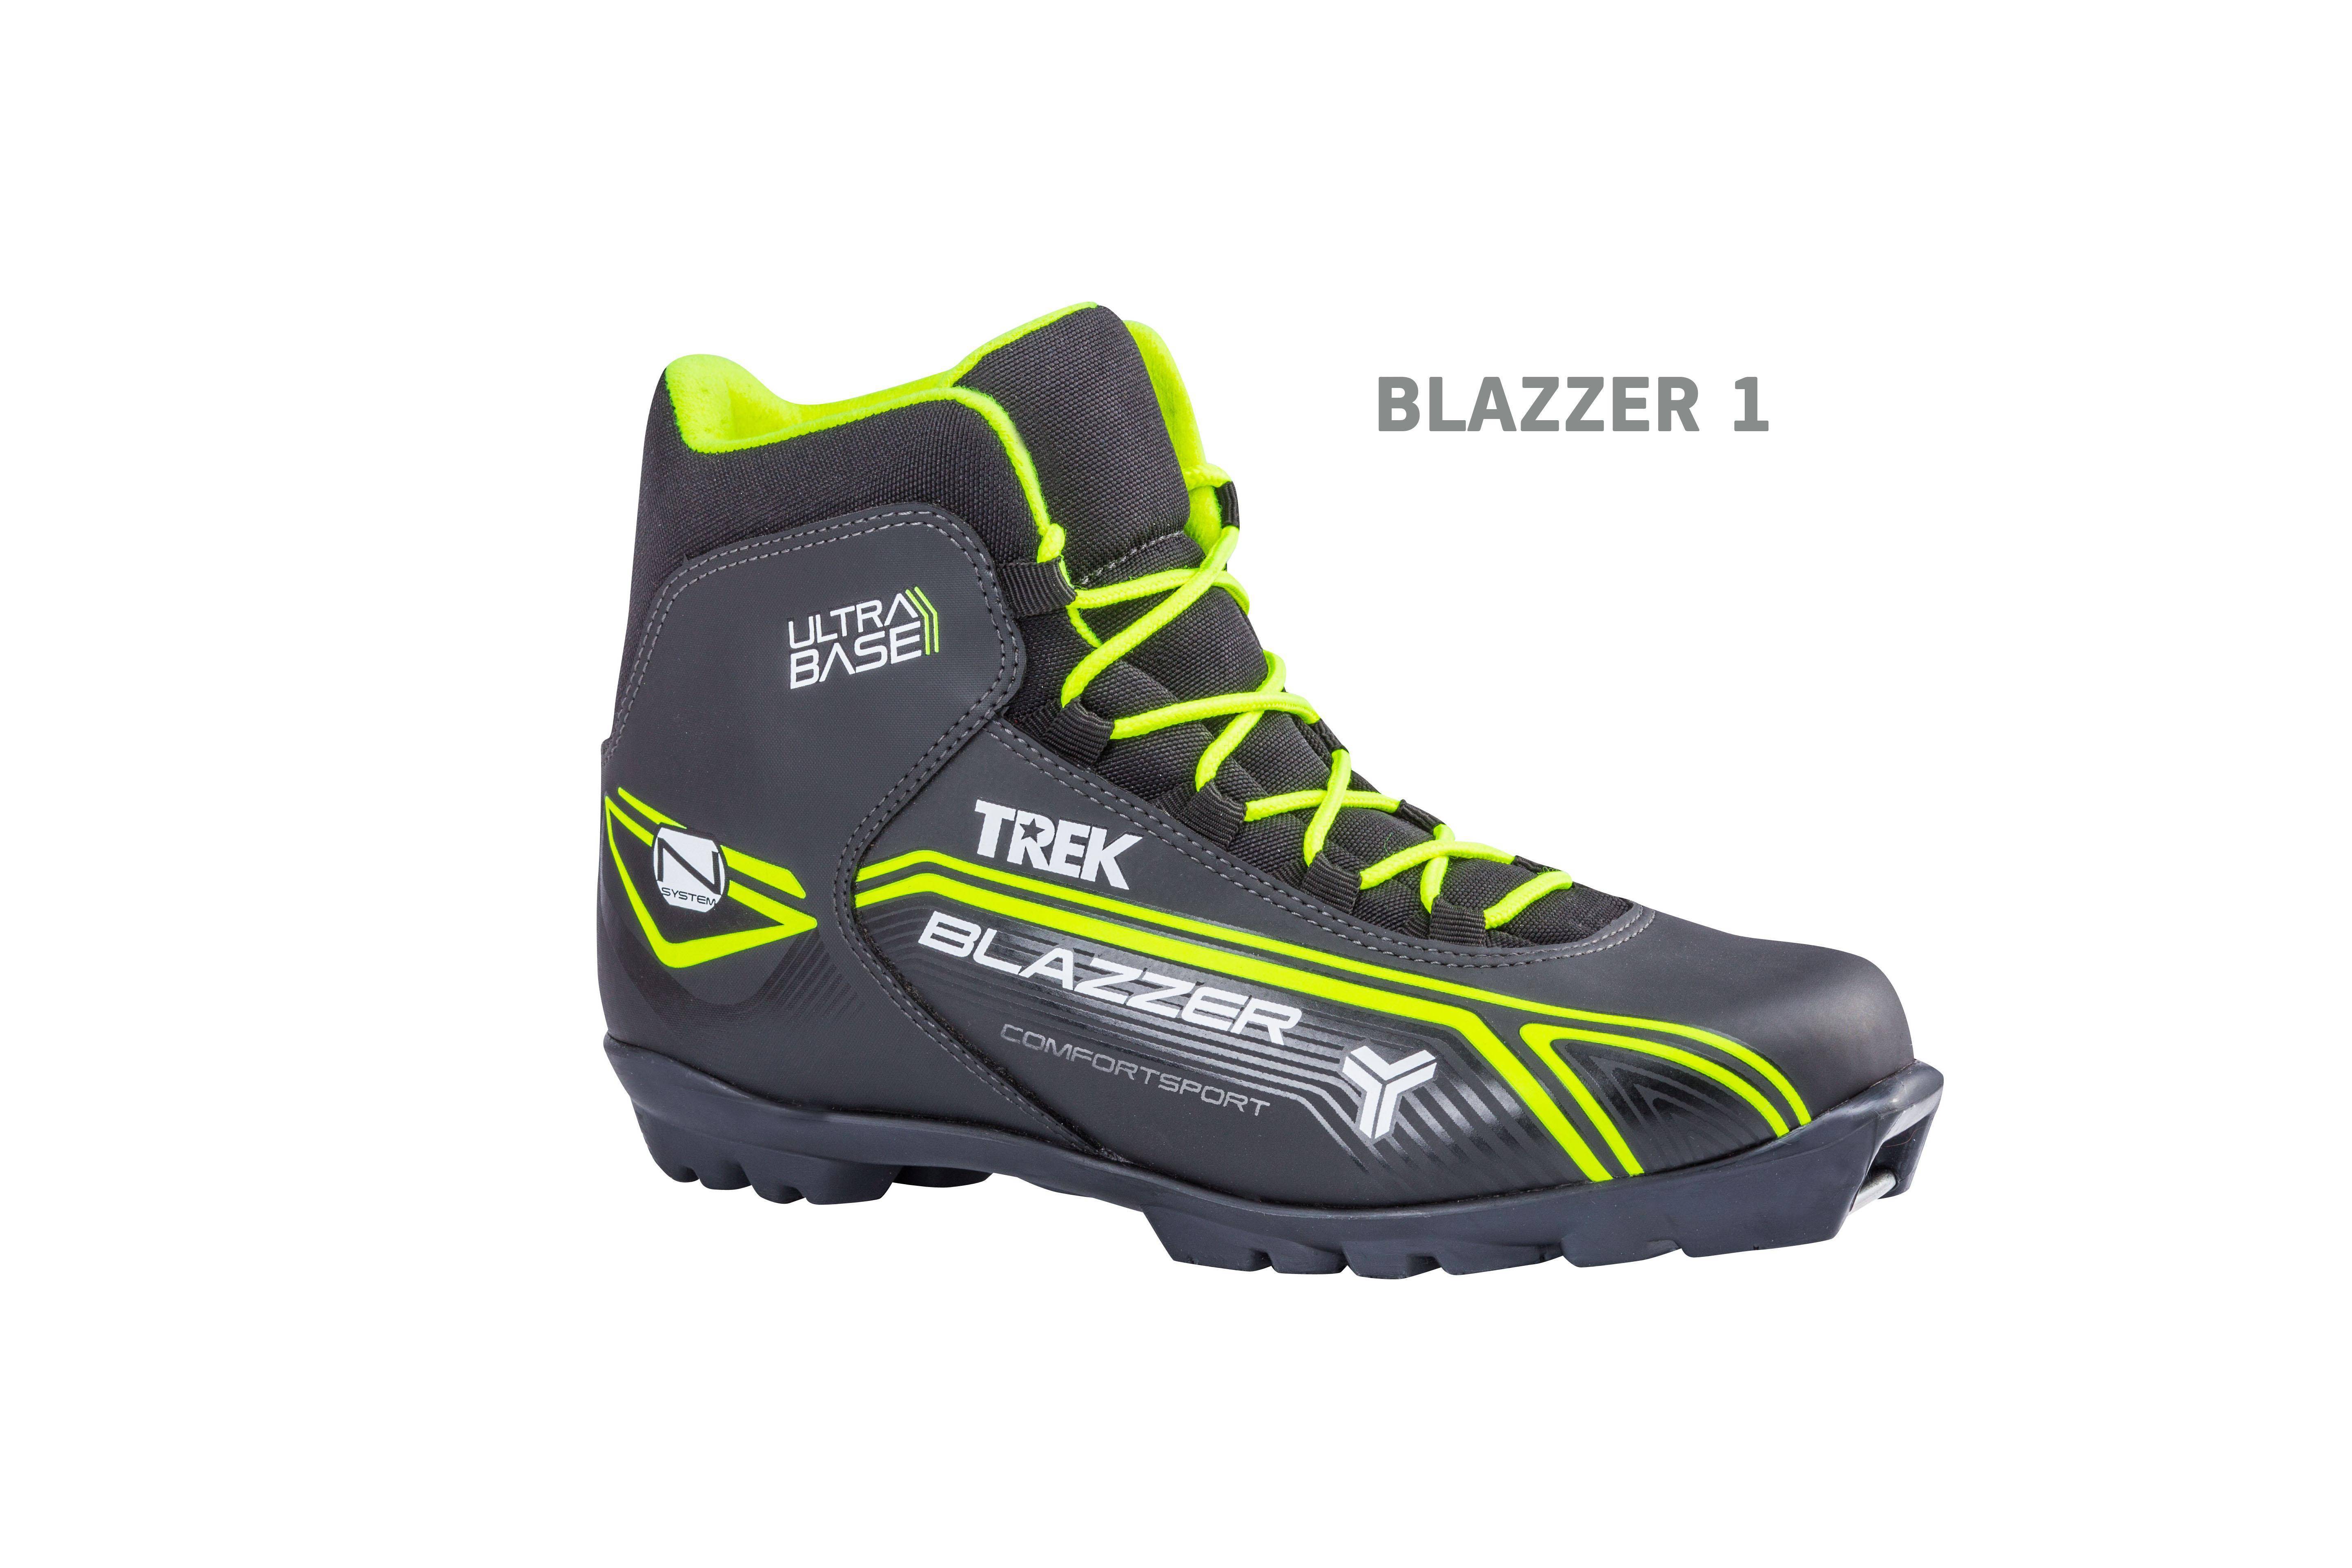 Blazzer  NNN  ботинки лыжные